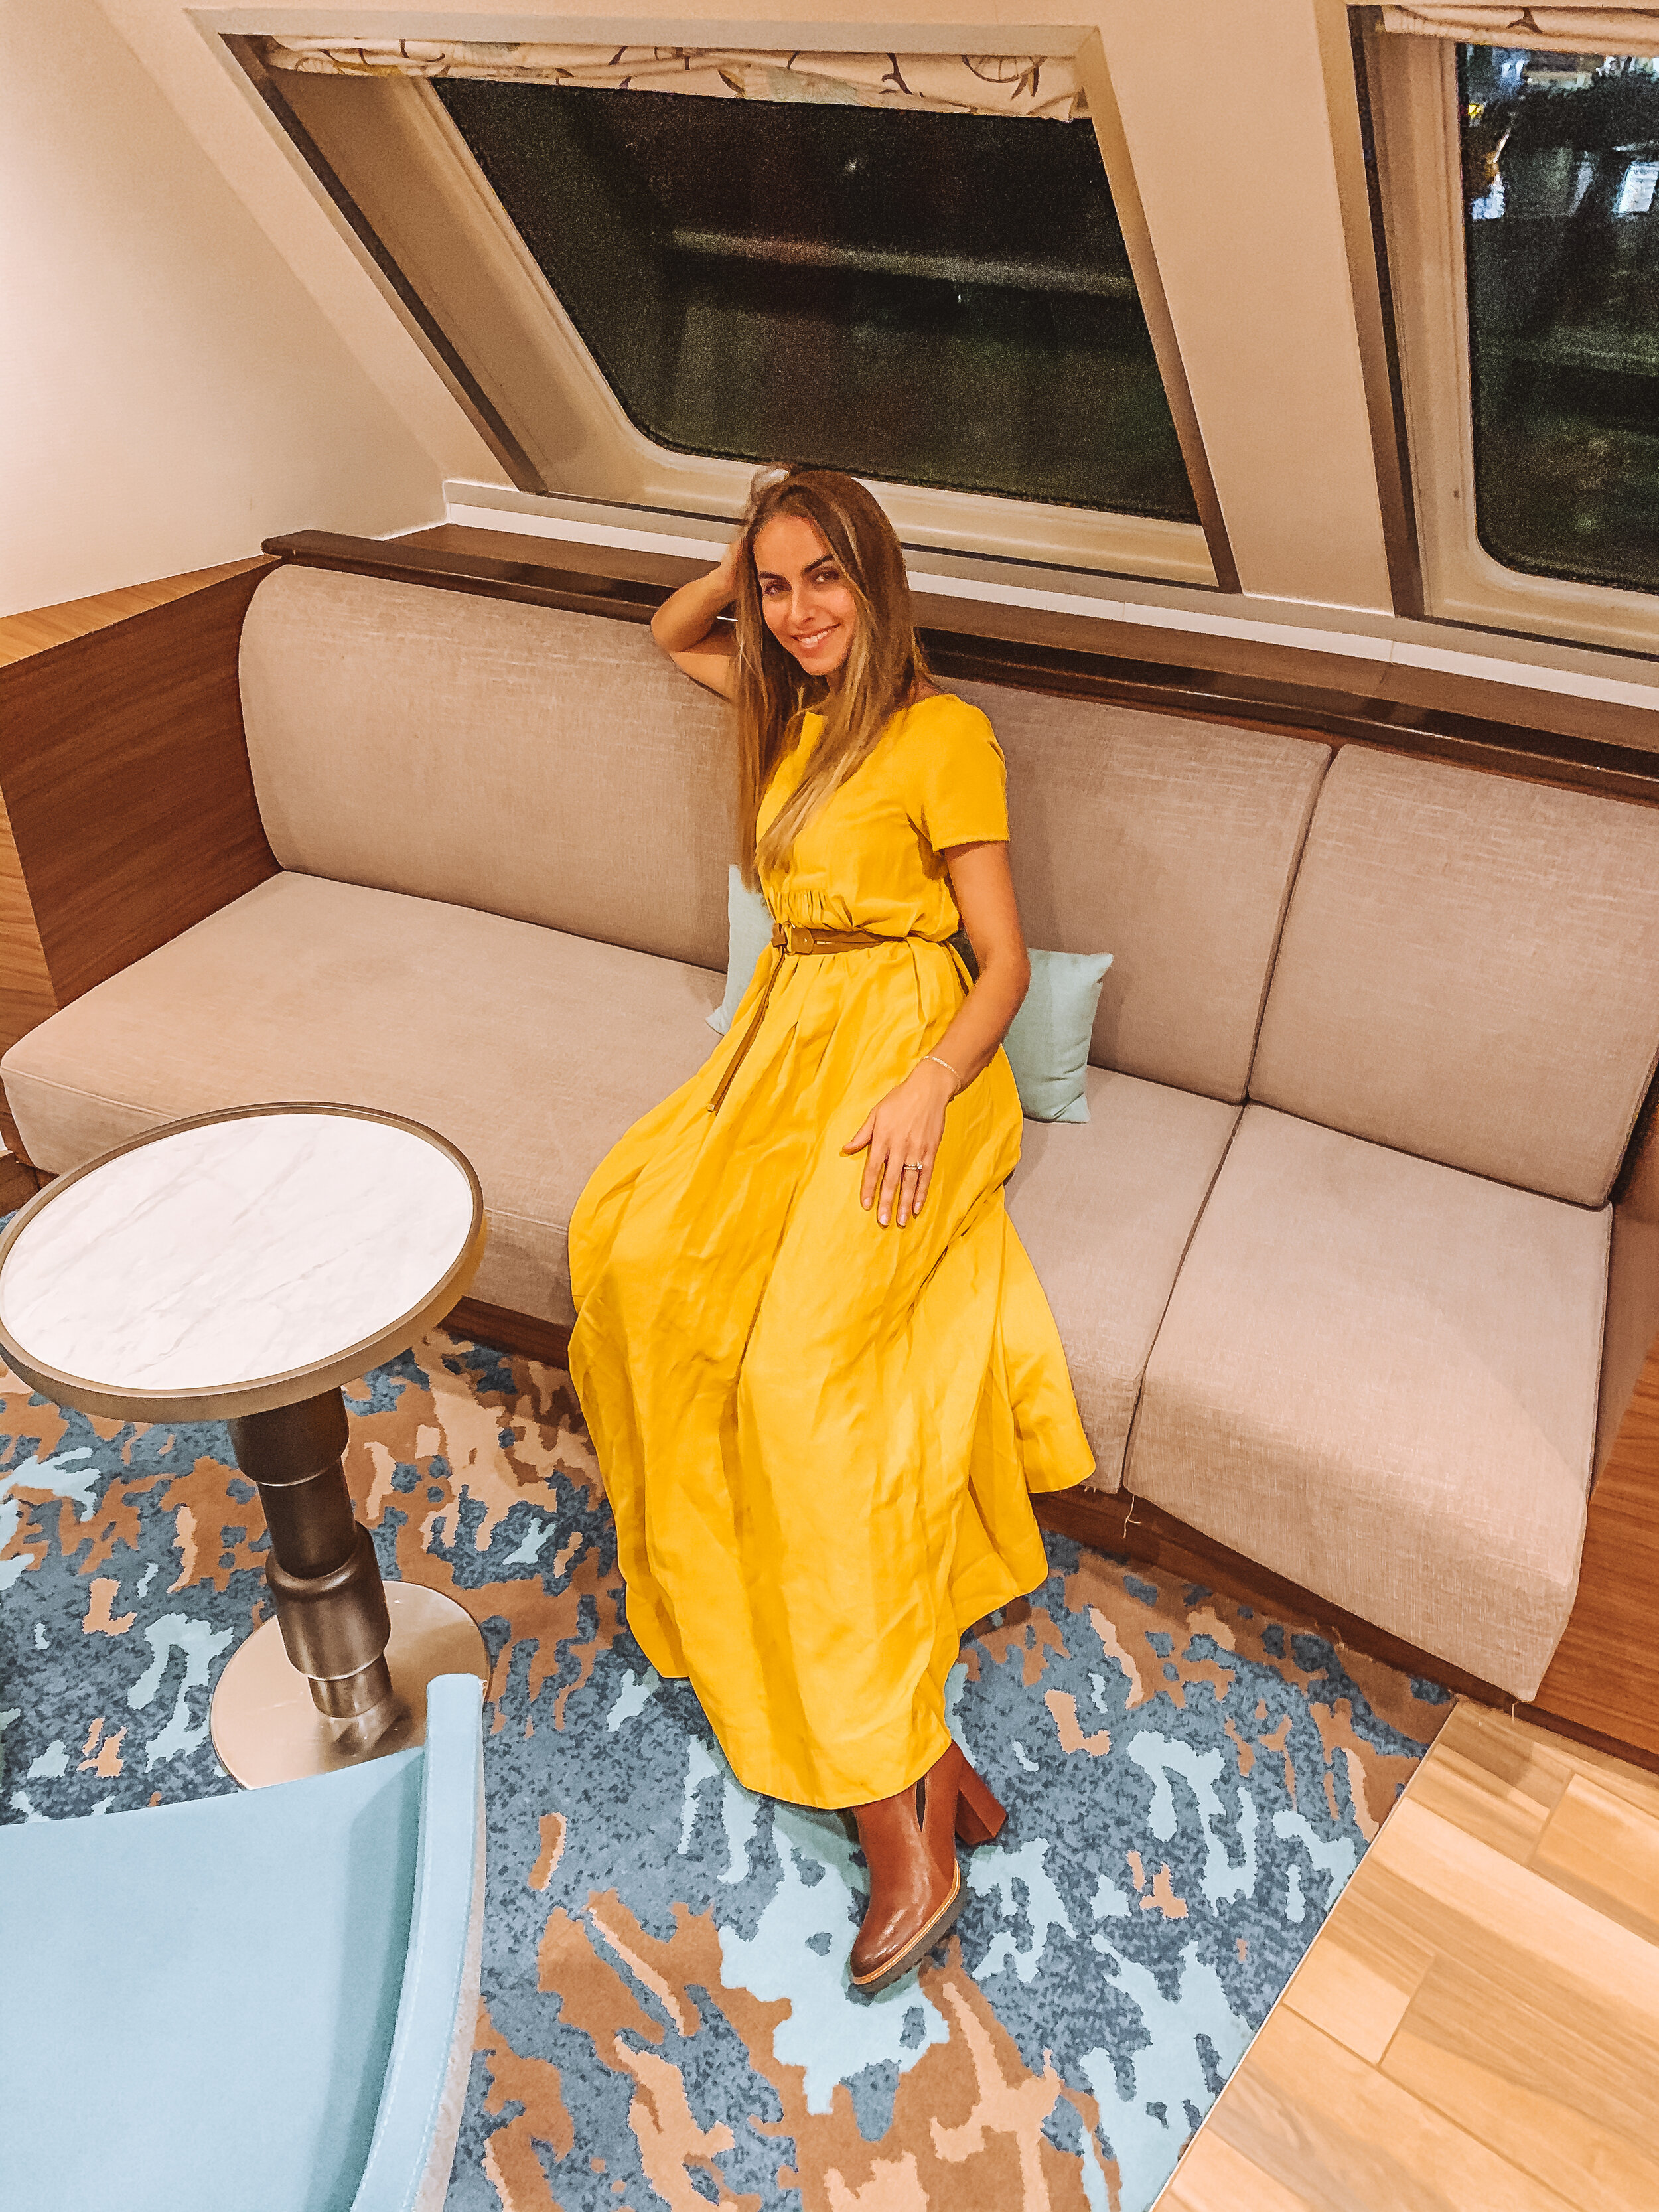 tasha-courtney-cruise-ship-lounge-yellow-dress.jpg